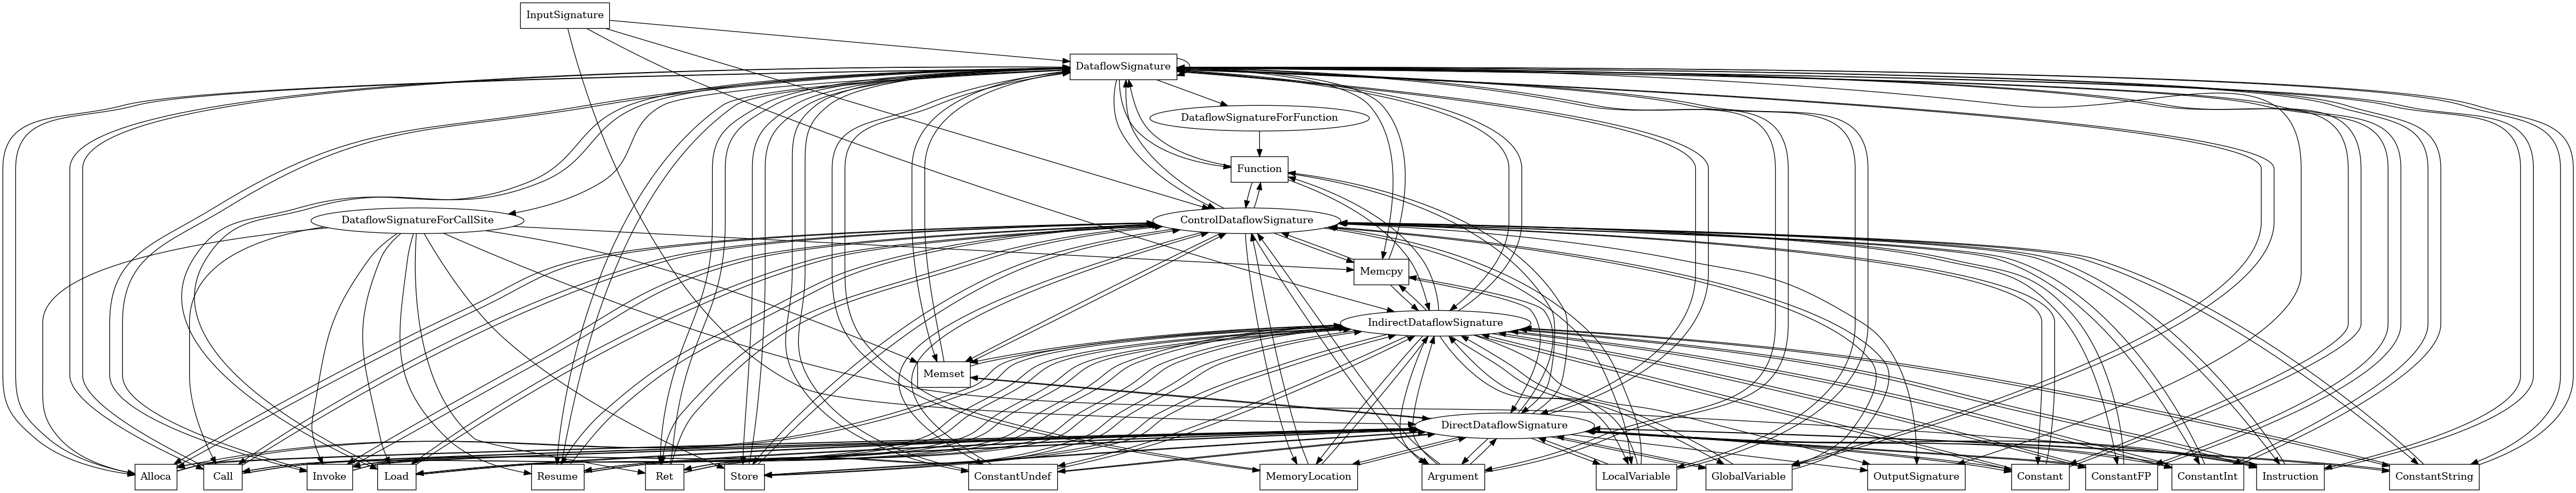 Entity-relationship diagram for DataflowSignature nodes